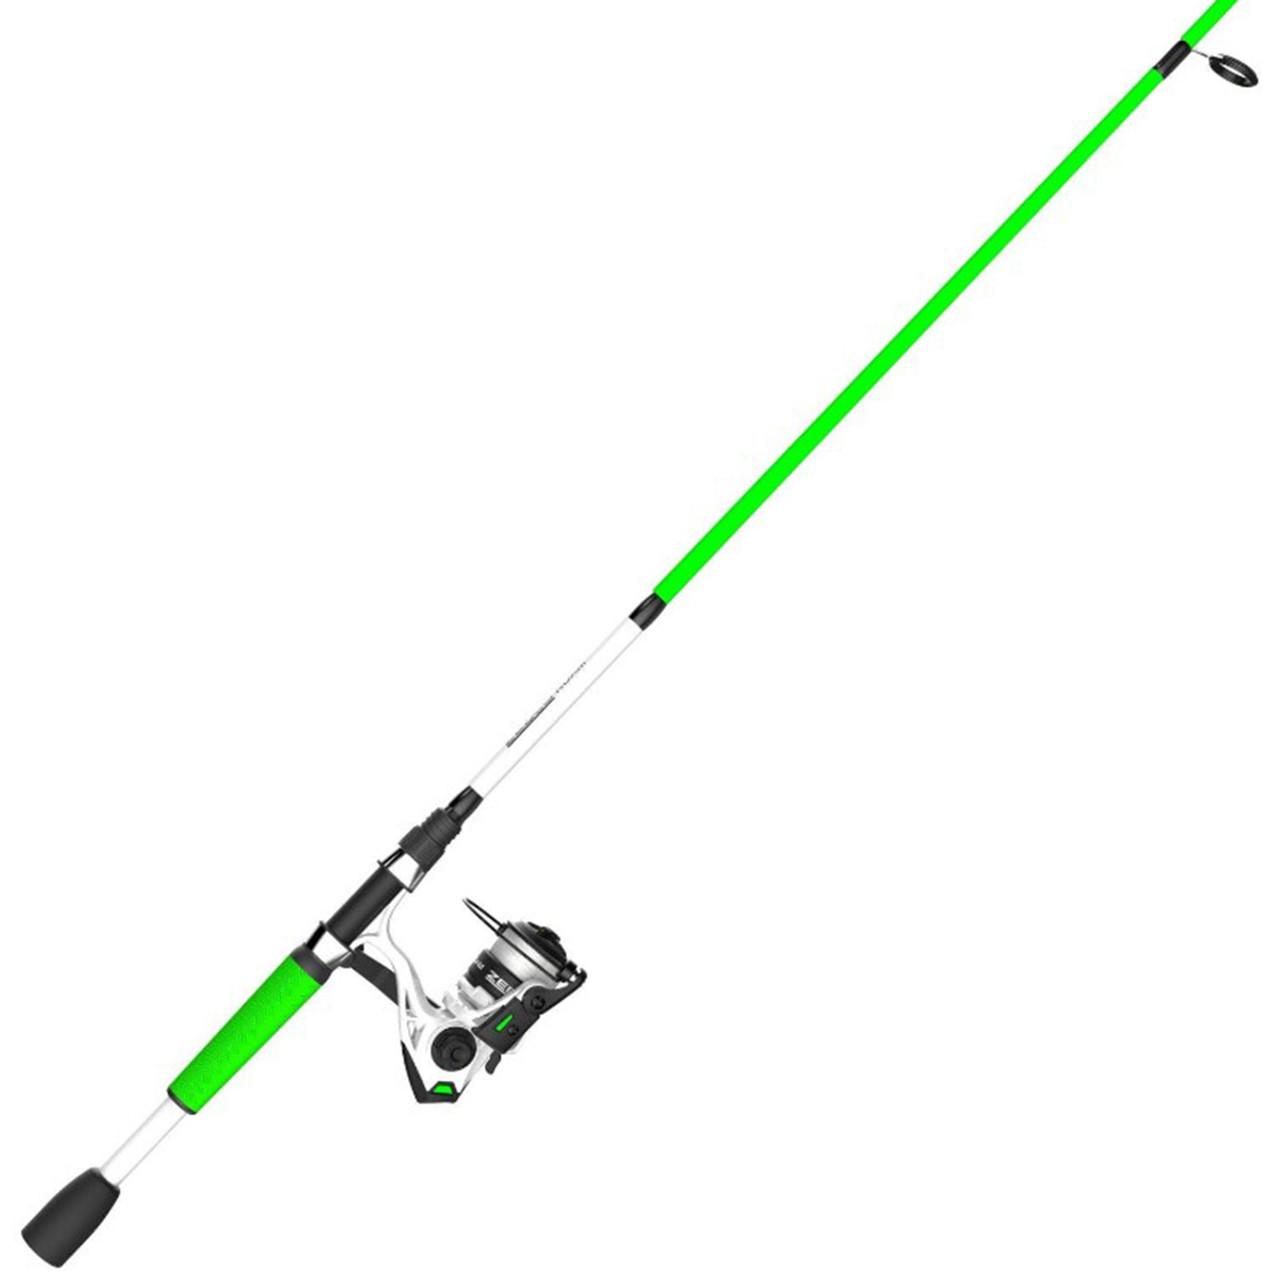 Zebco Roam Spinning Reel and Fishing Rod Combo, Split ComfortGrip Rod  Handle, Soft-Touch Handle Knob